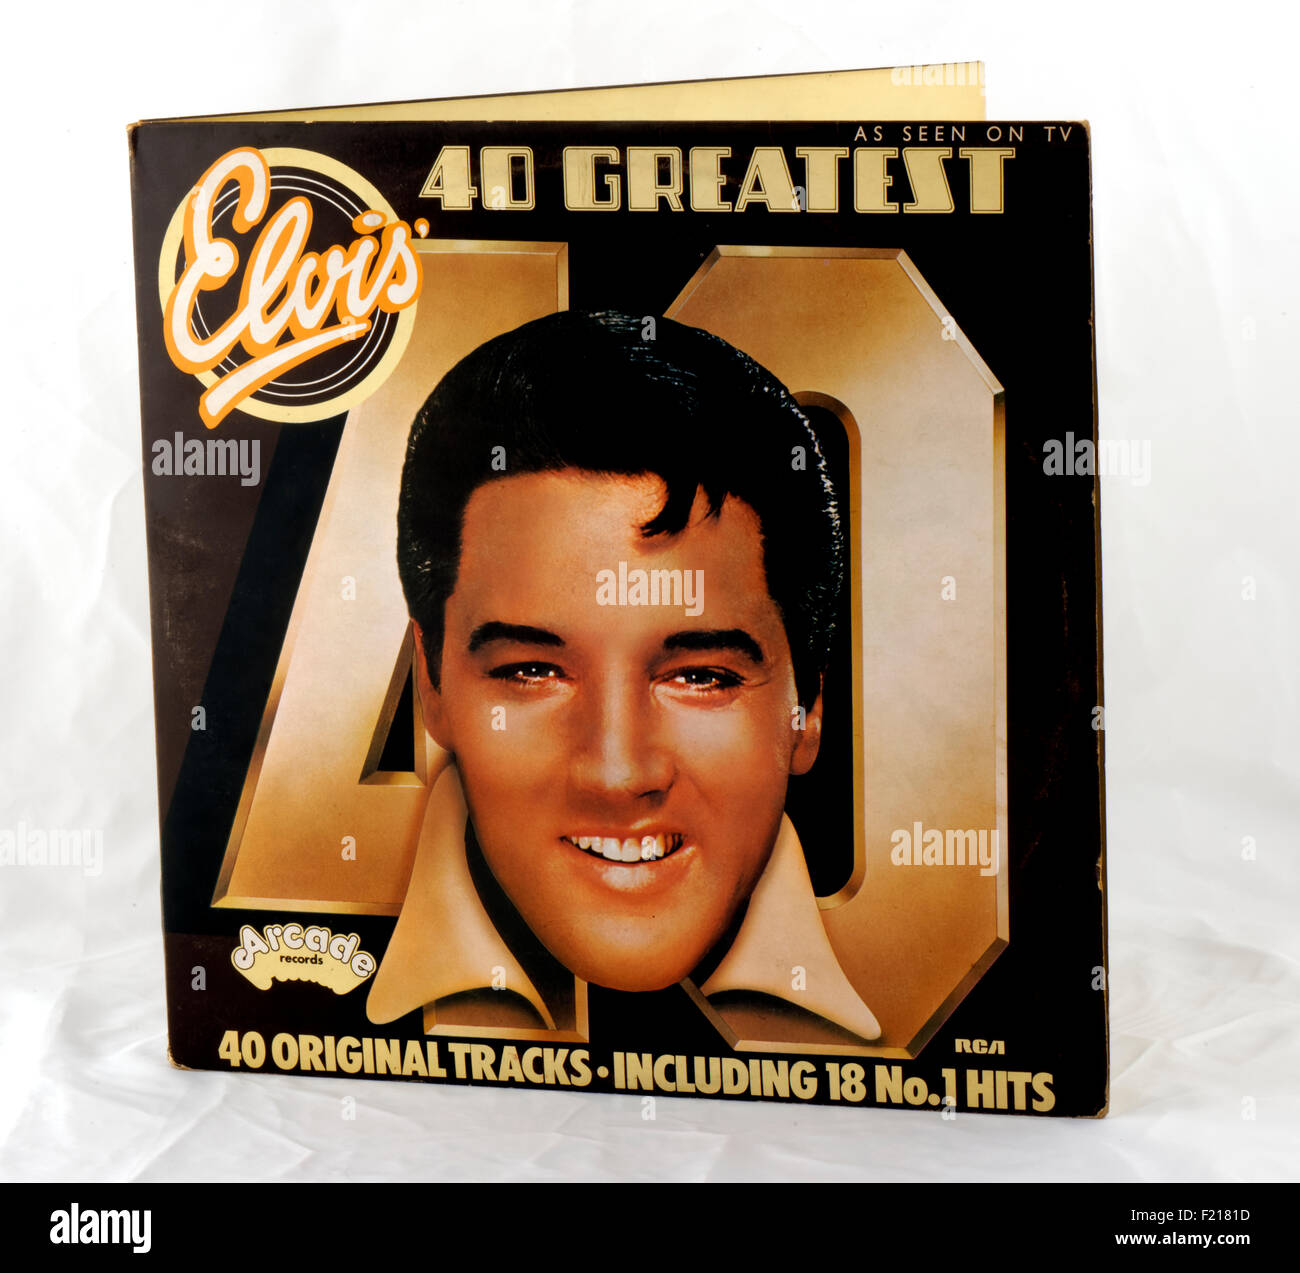 skridtlængde Antarktis uddrag Elvis Presley vinyl record album Arcade "40 greatest Hits" double album  collection Stock Photo - Alamy